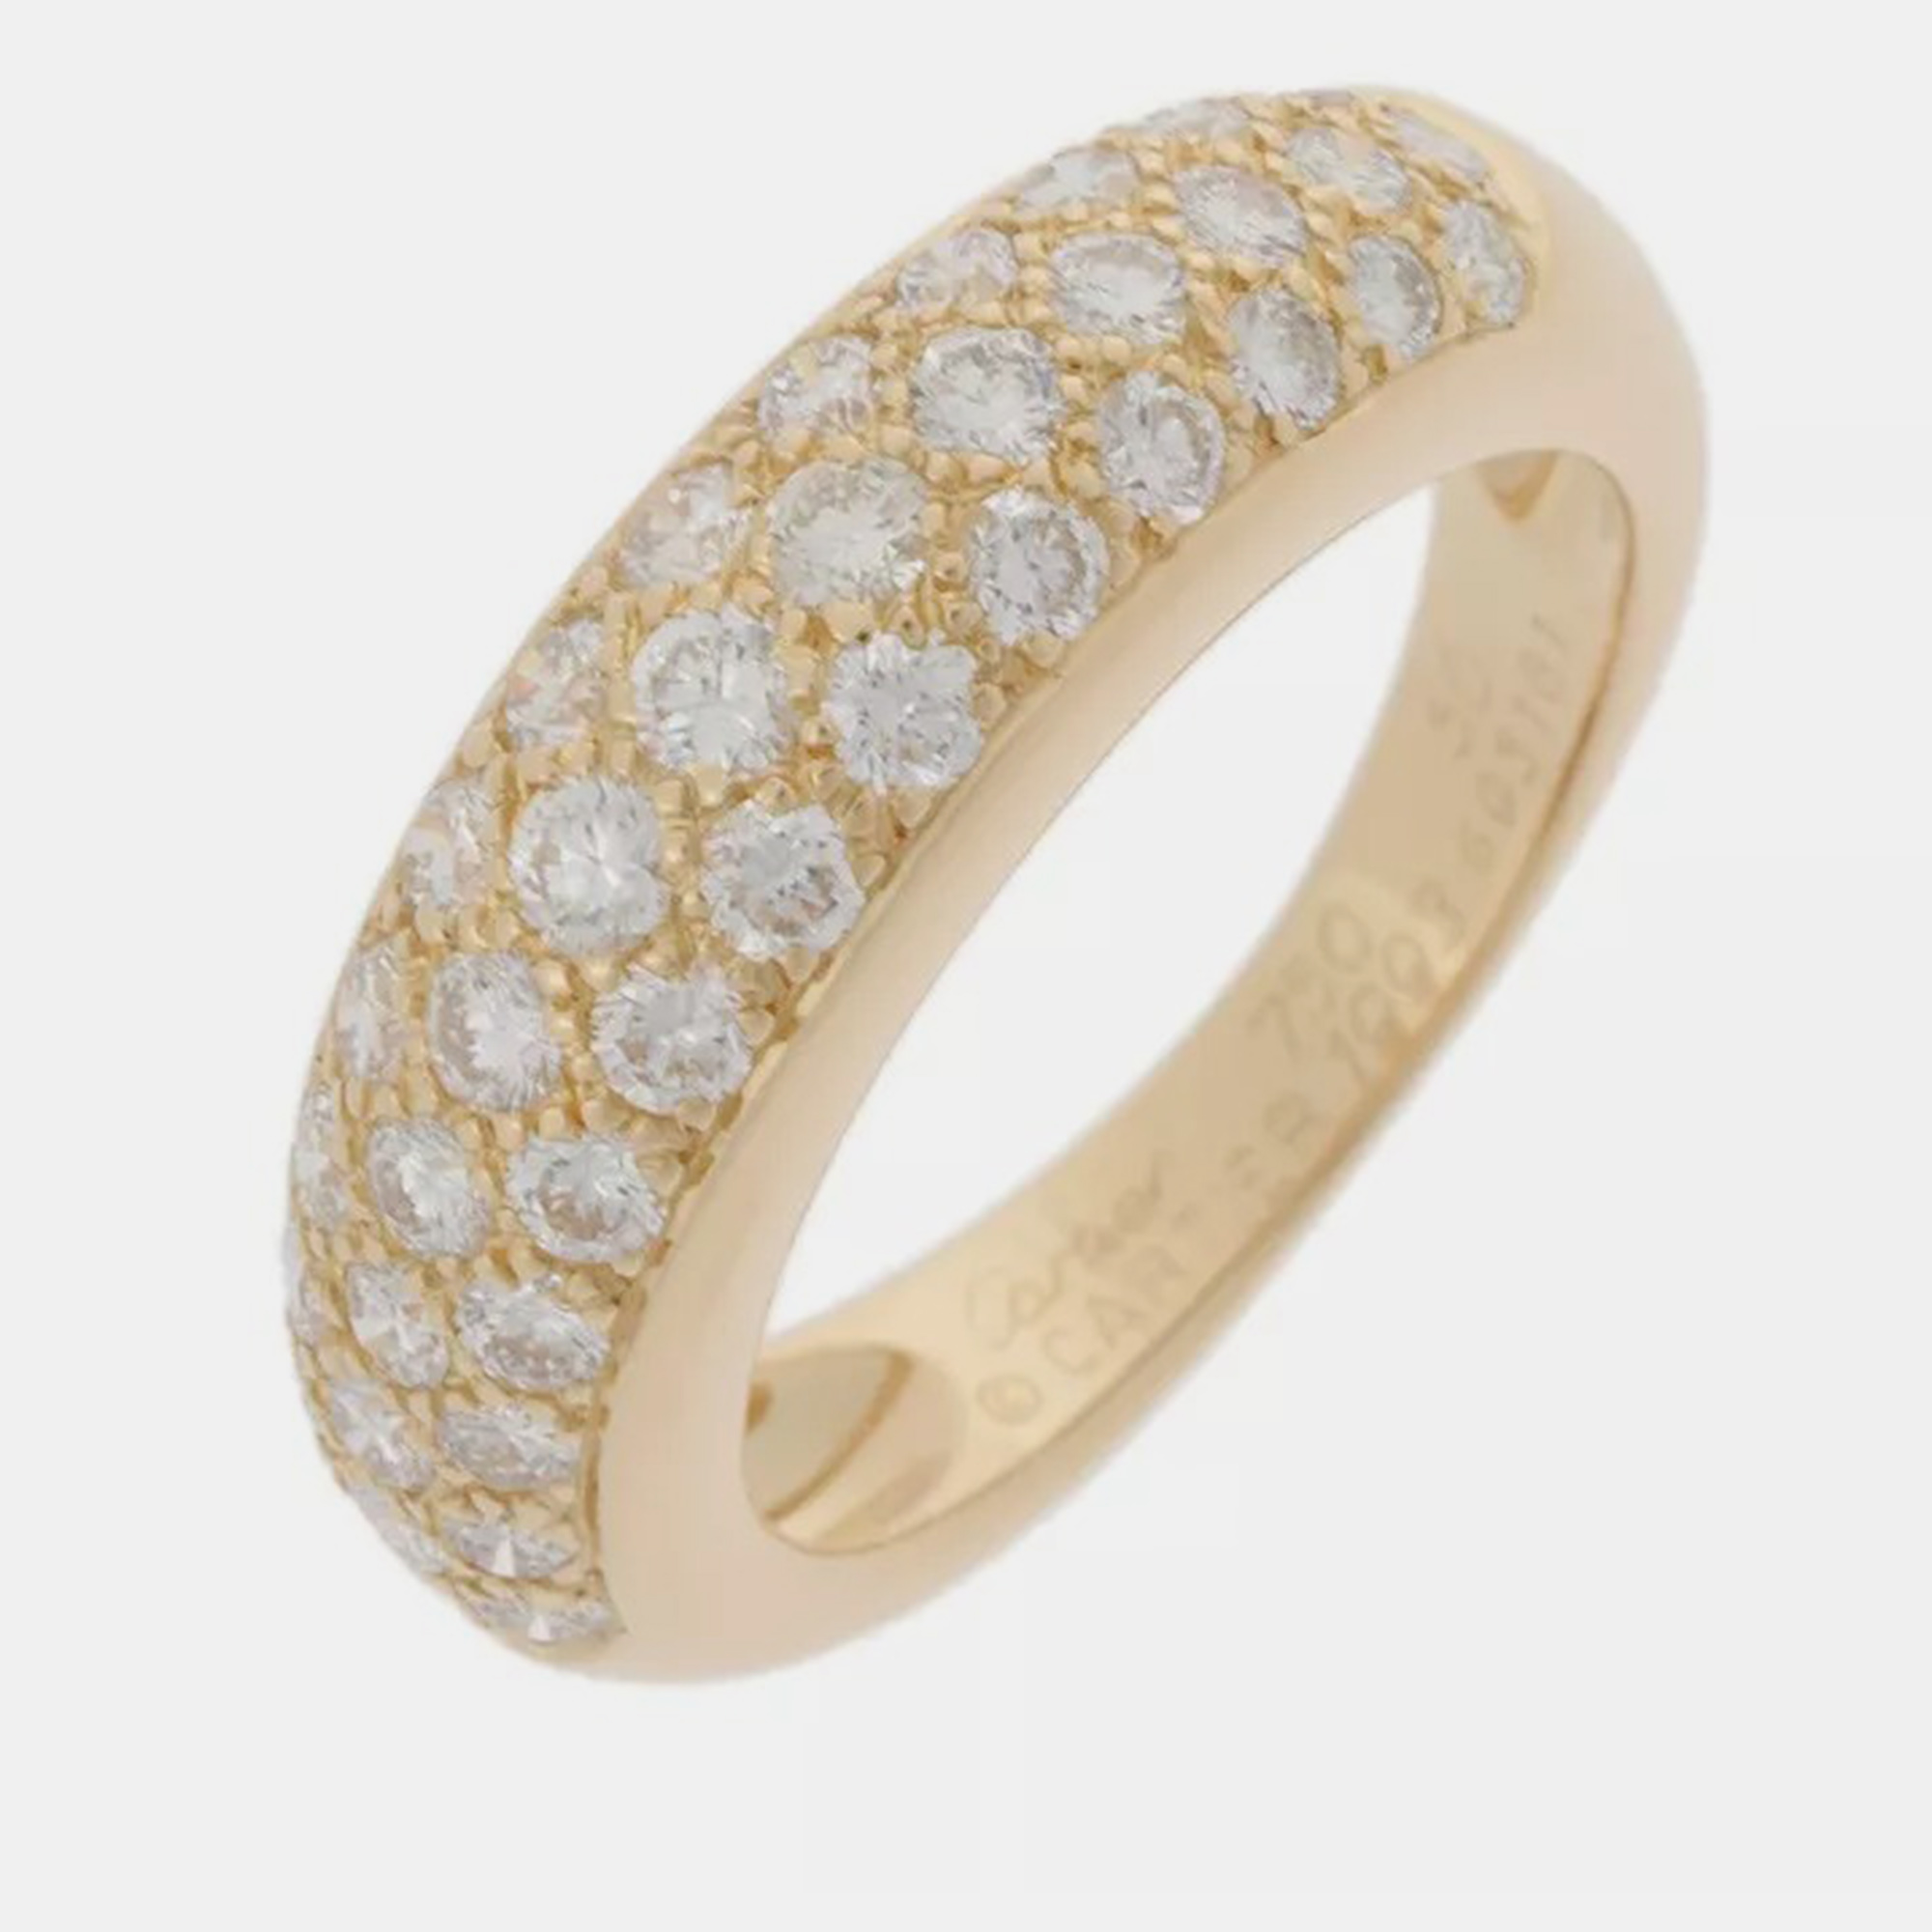 Cartier 18k yellow gold diamond "mimi star" ring size 50